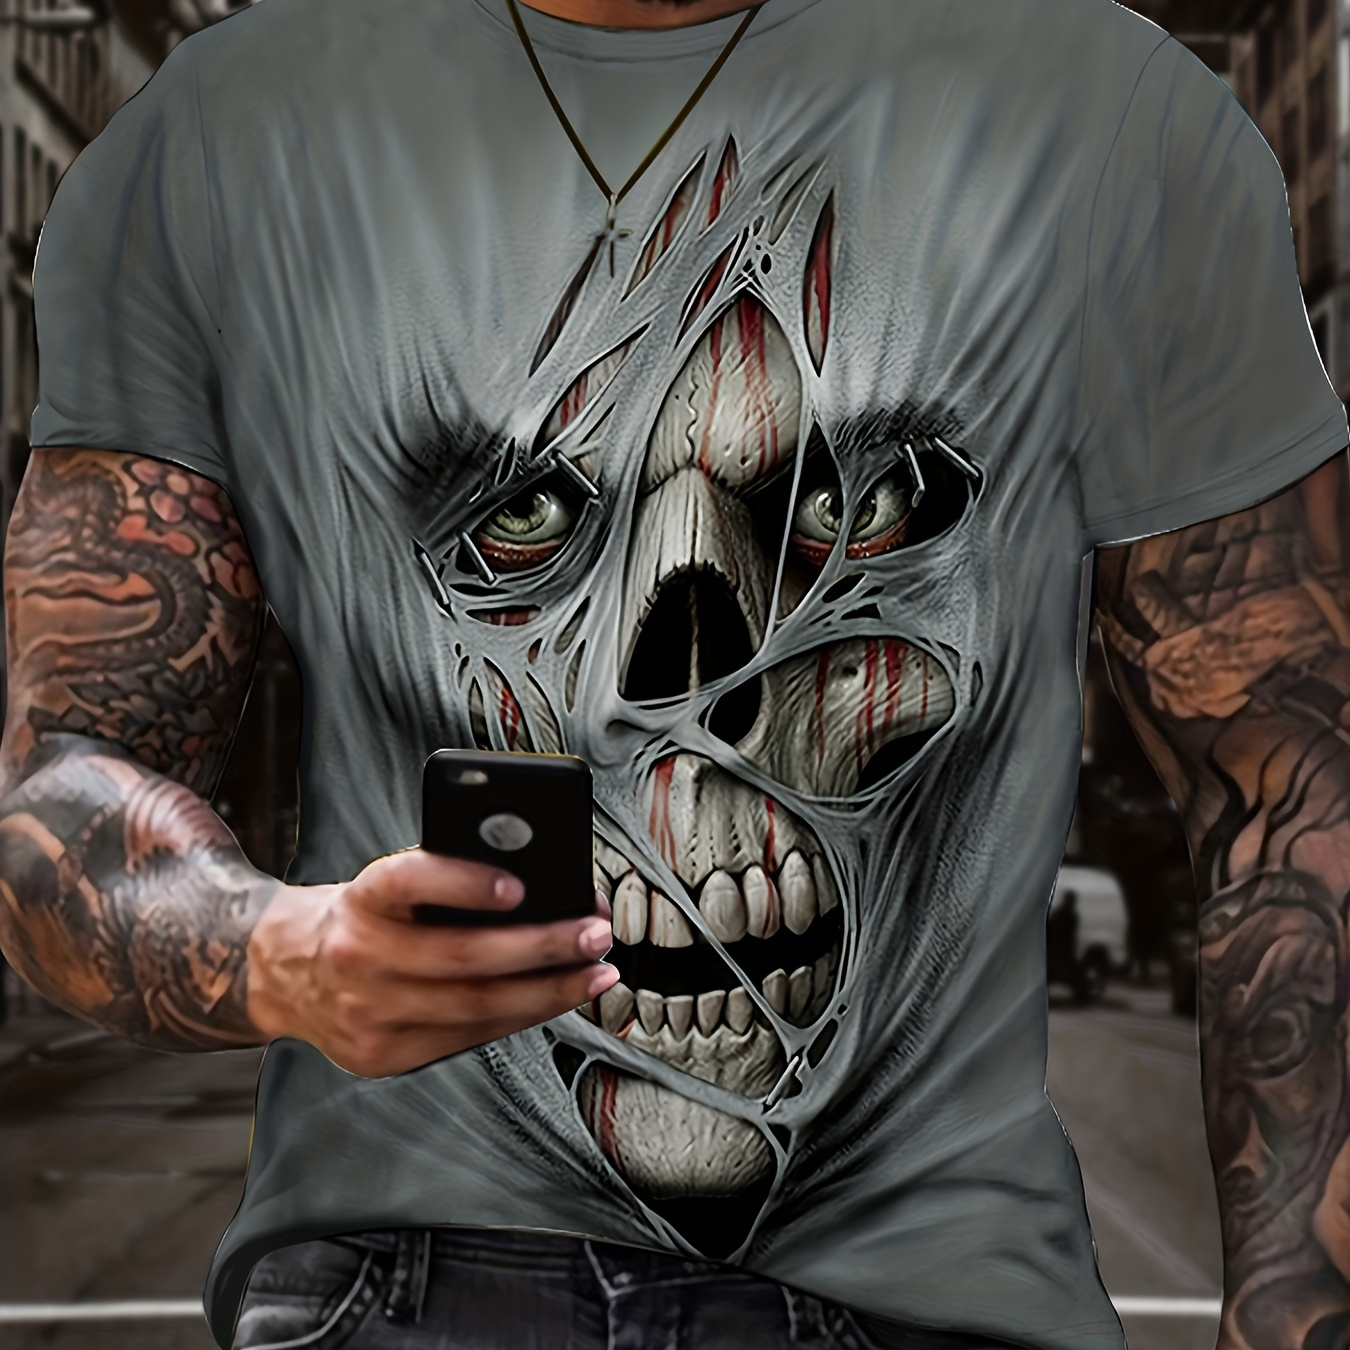 

Horror Skull 3d Digital Pattern Print Graphic Men's T-shirts, Halloween Causal Tees, Short Sleeves Comfortable Pullover Tops, Men's Summer Clothing